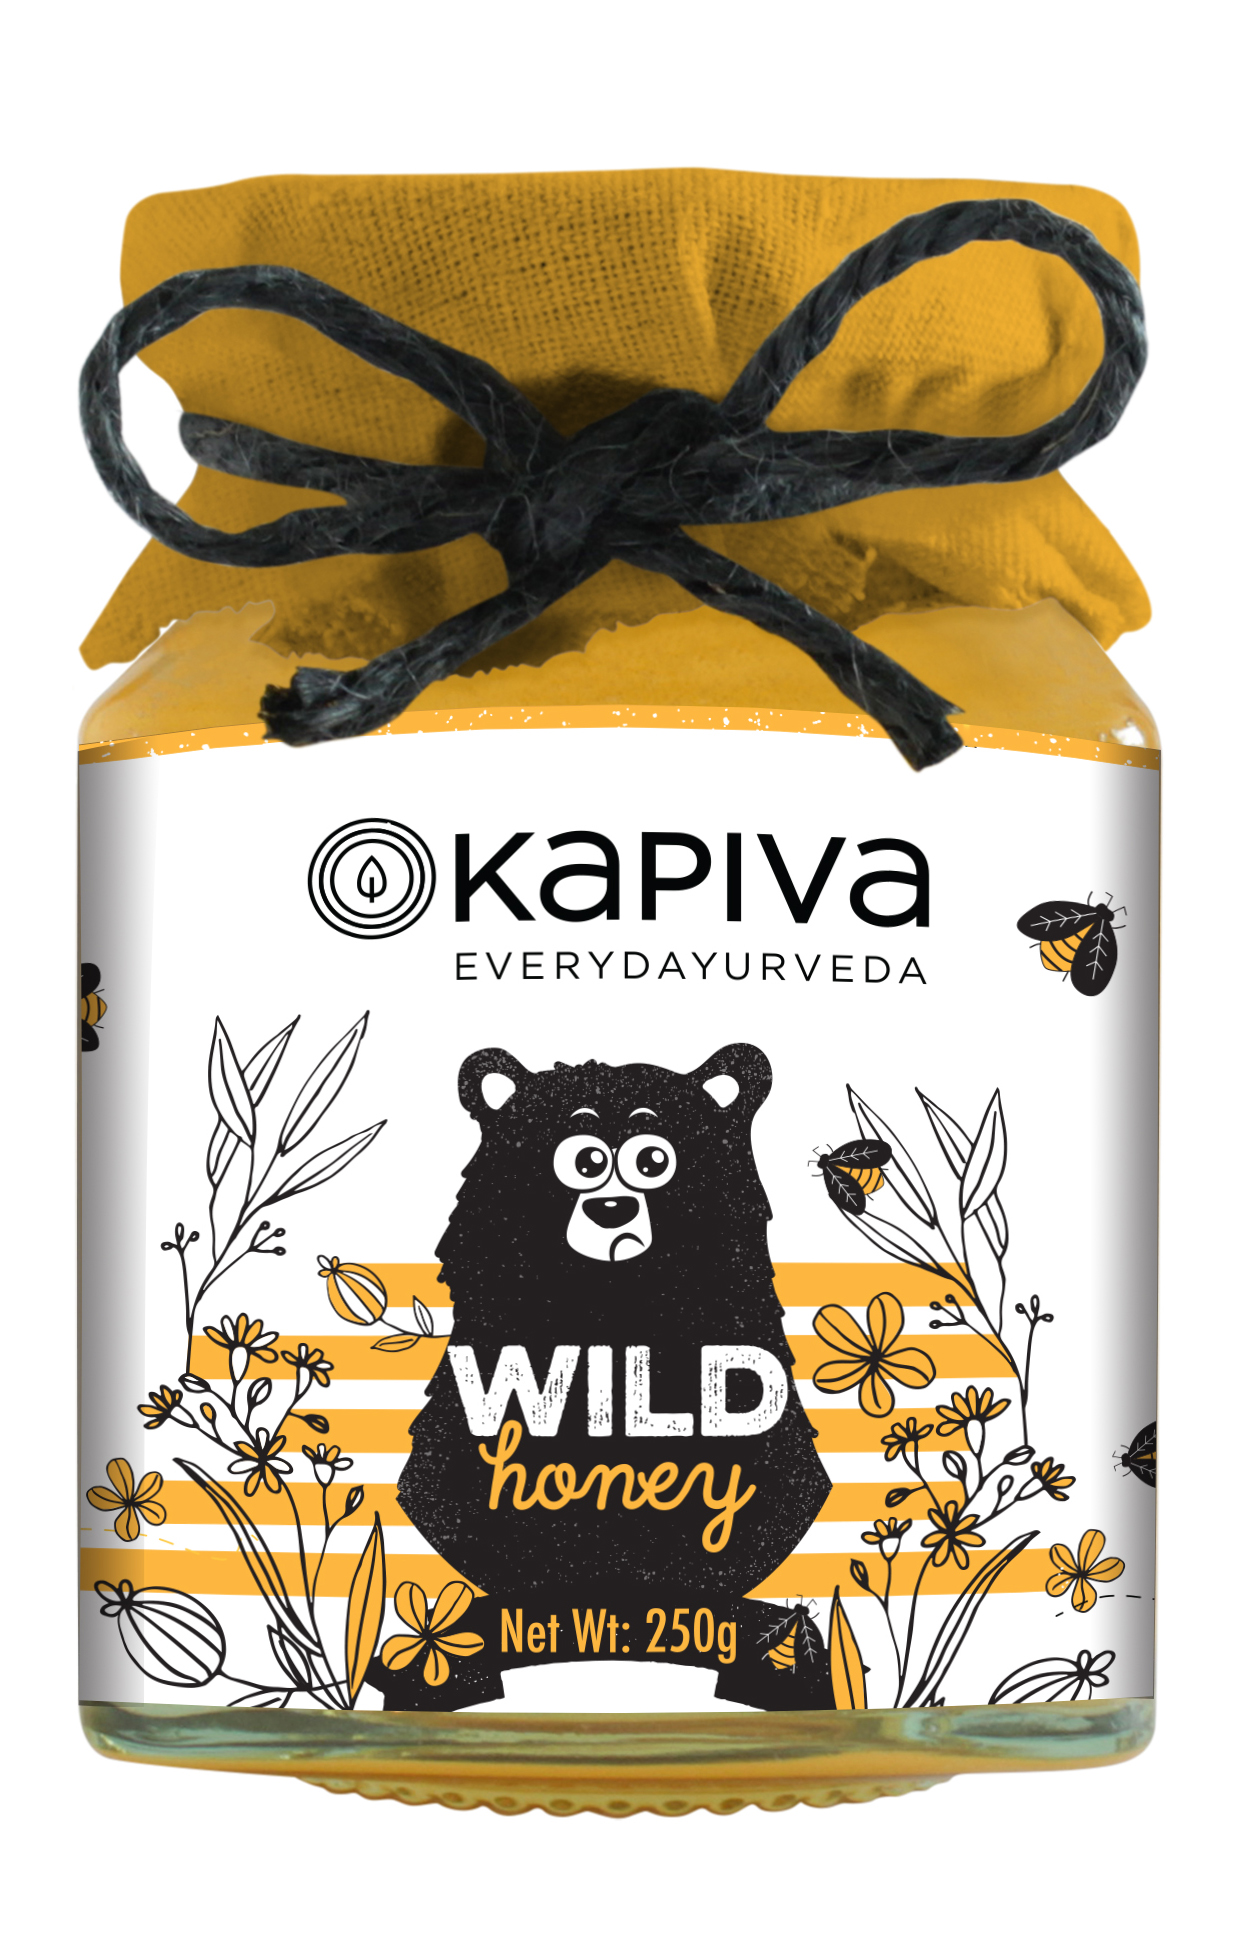 Buy Kapiva Wild Honey at Best Price Online